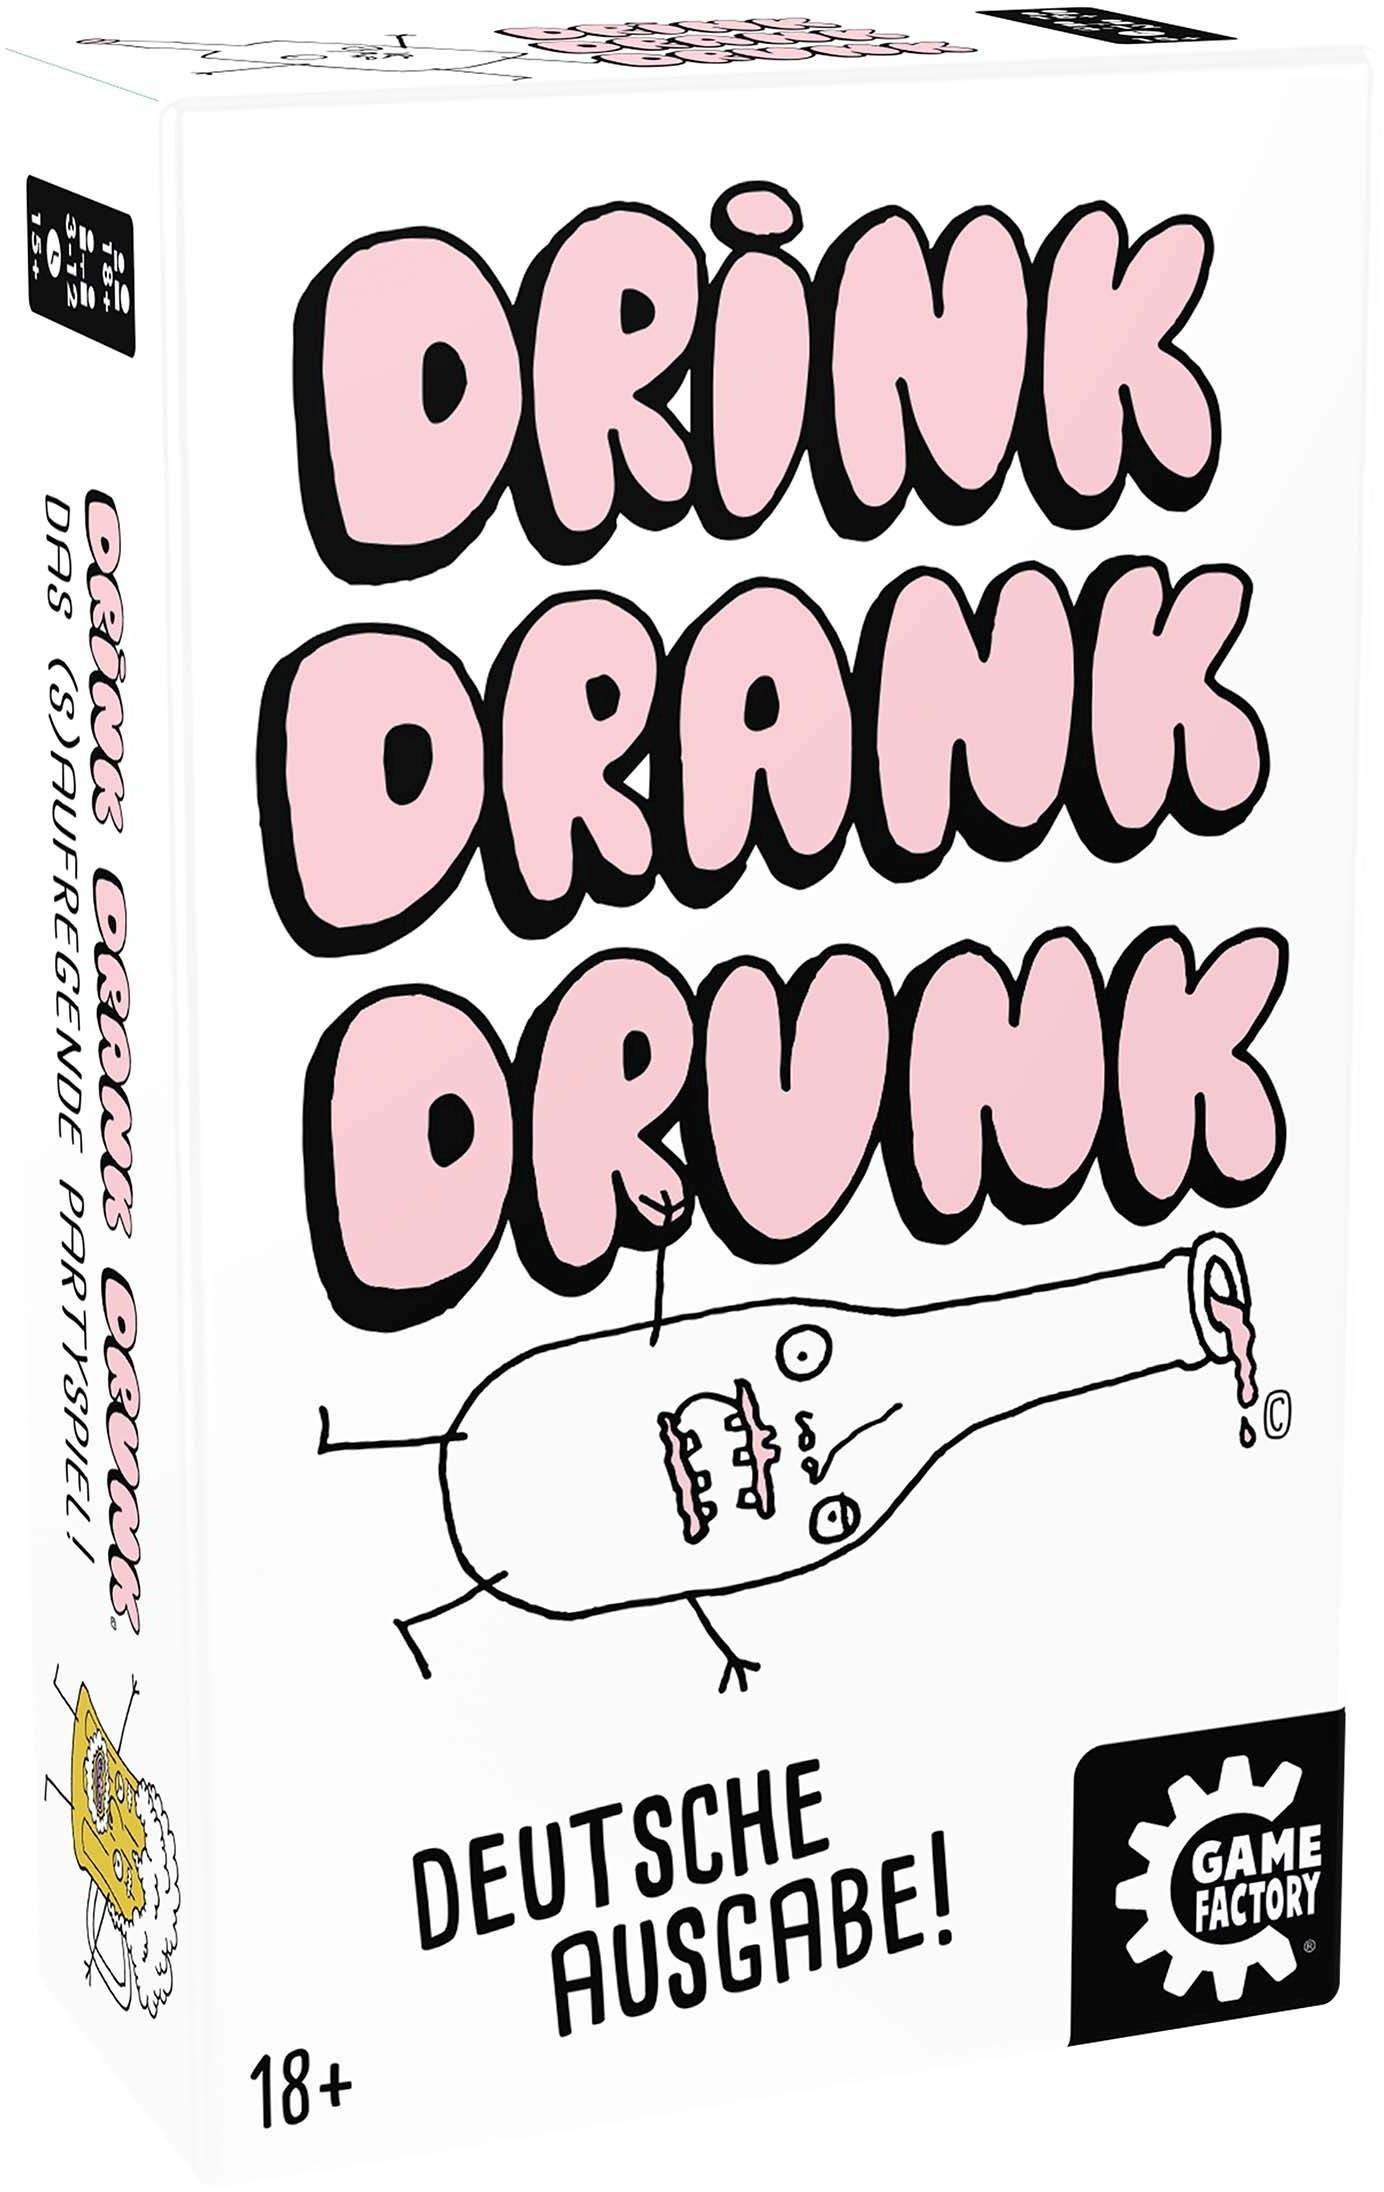 _Drink Drank Drunk_